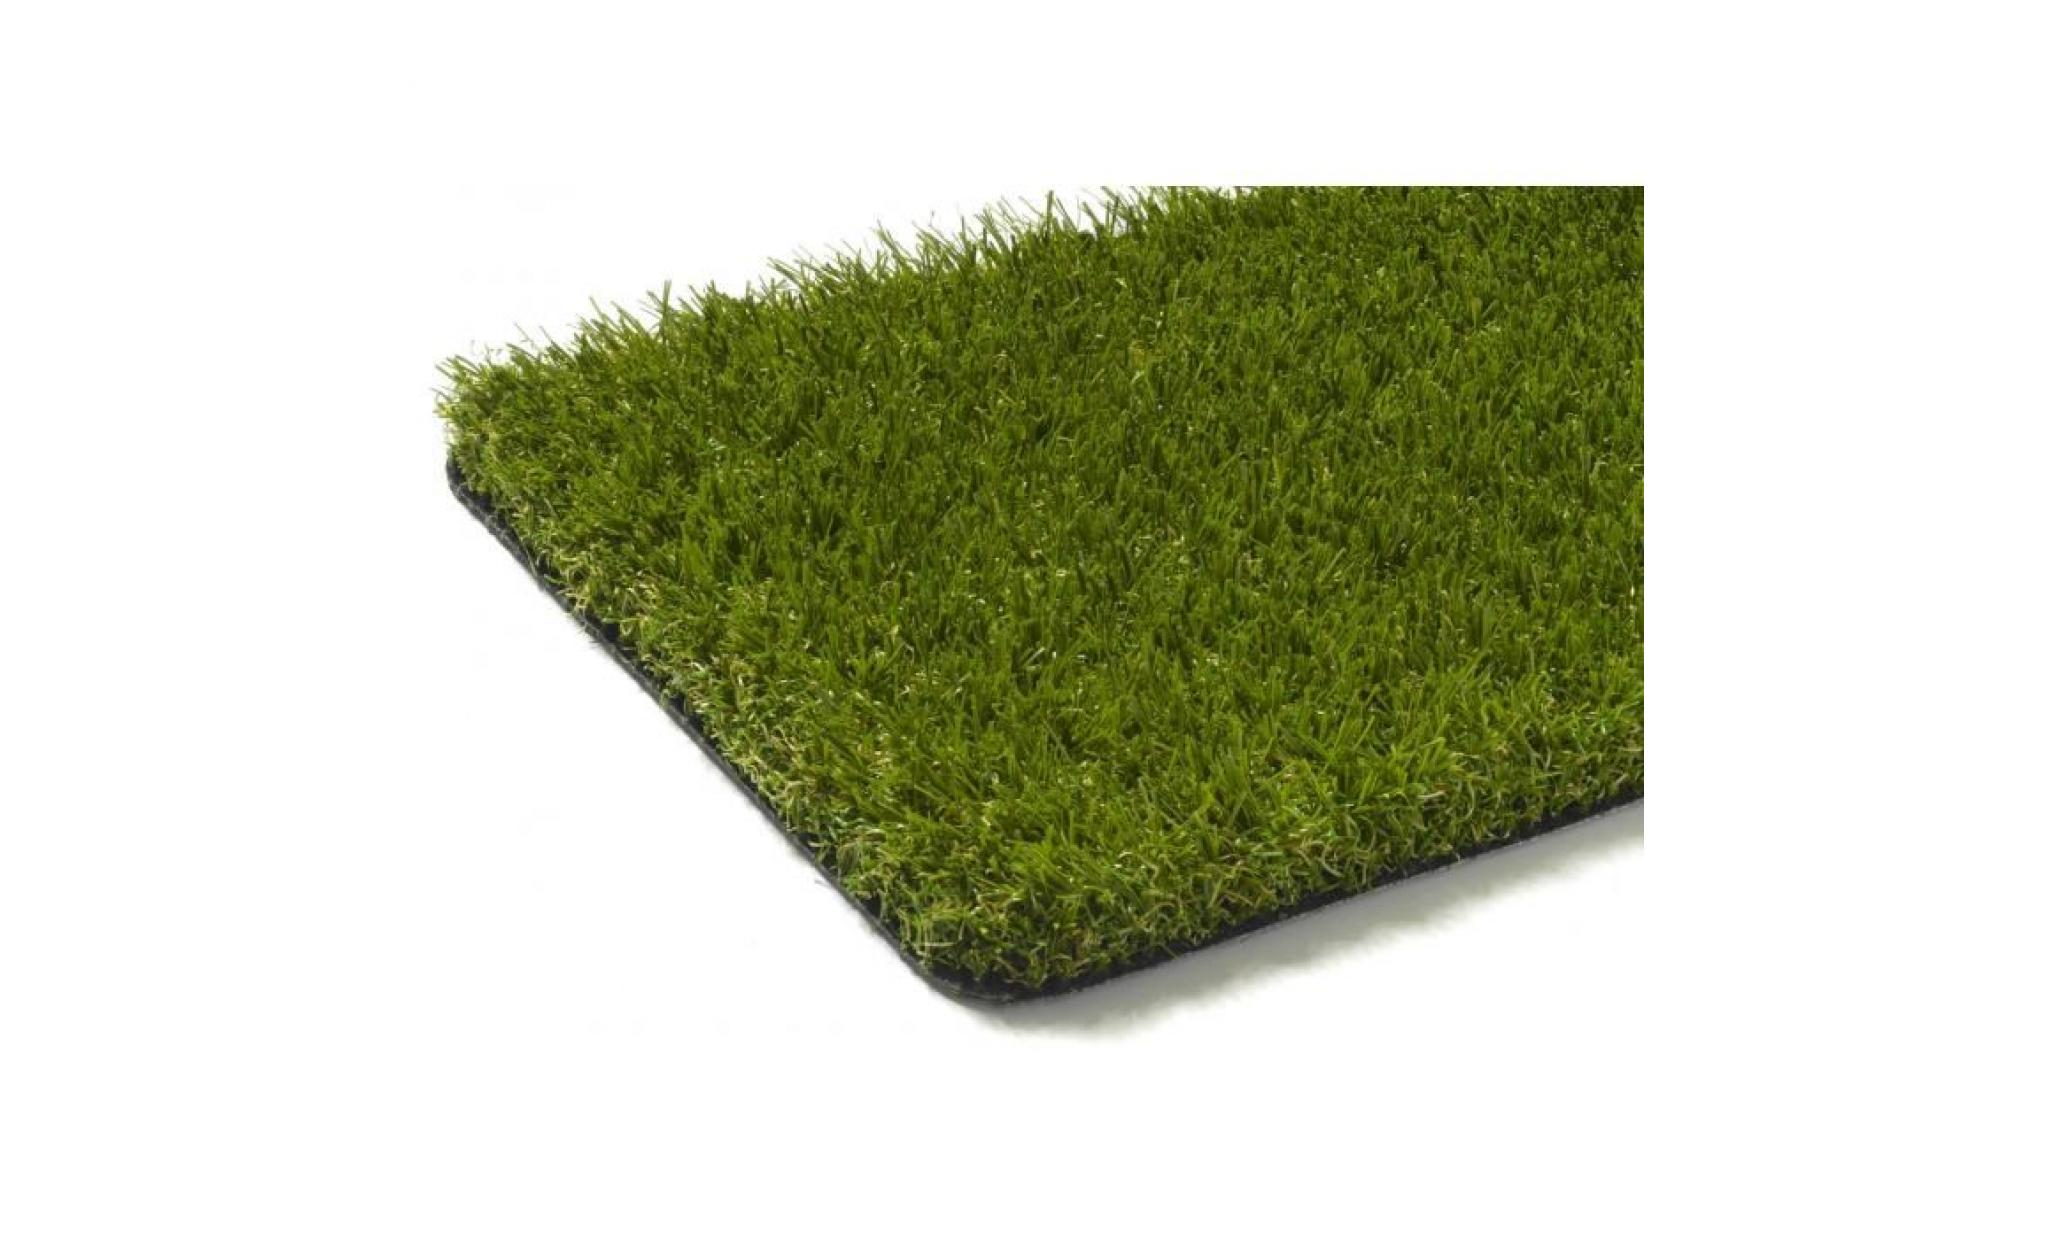 oxford   tapis type luxe gazon artificiel – pour jardin, terrasse, balcon   vert  [400x100 cm]